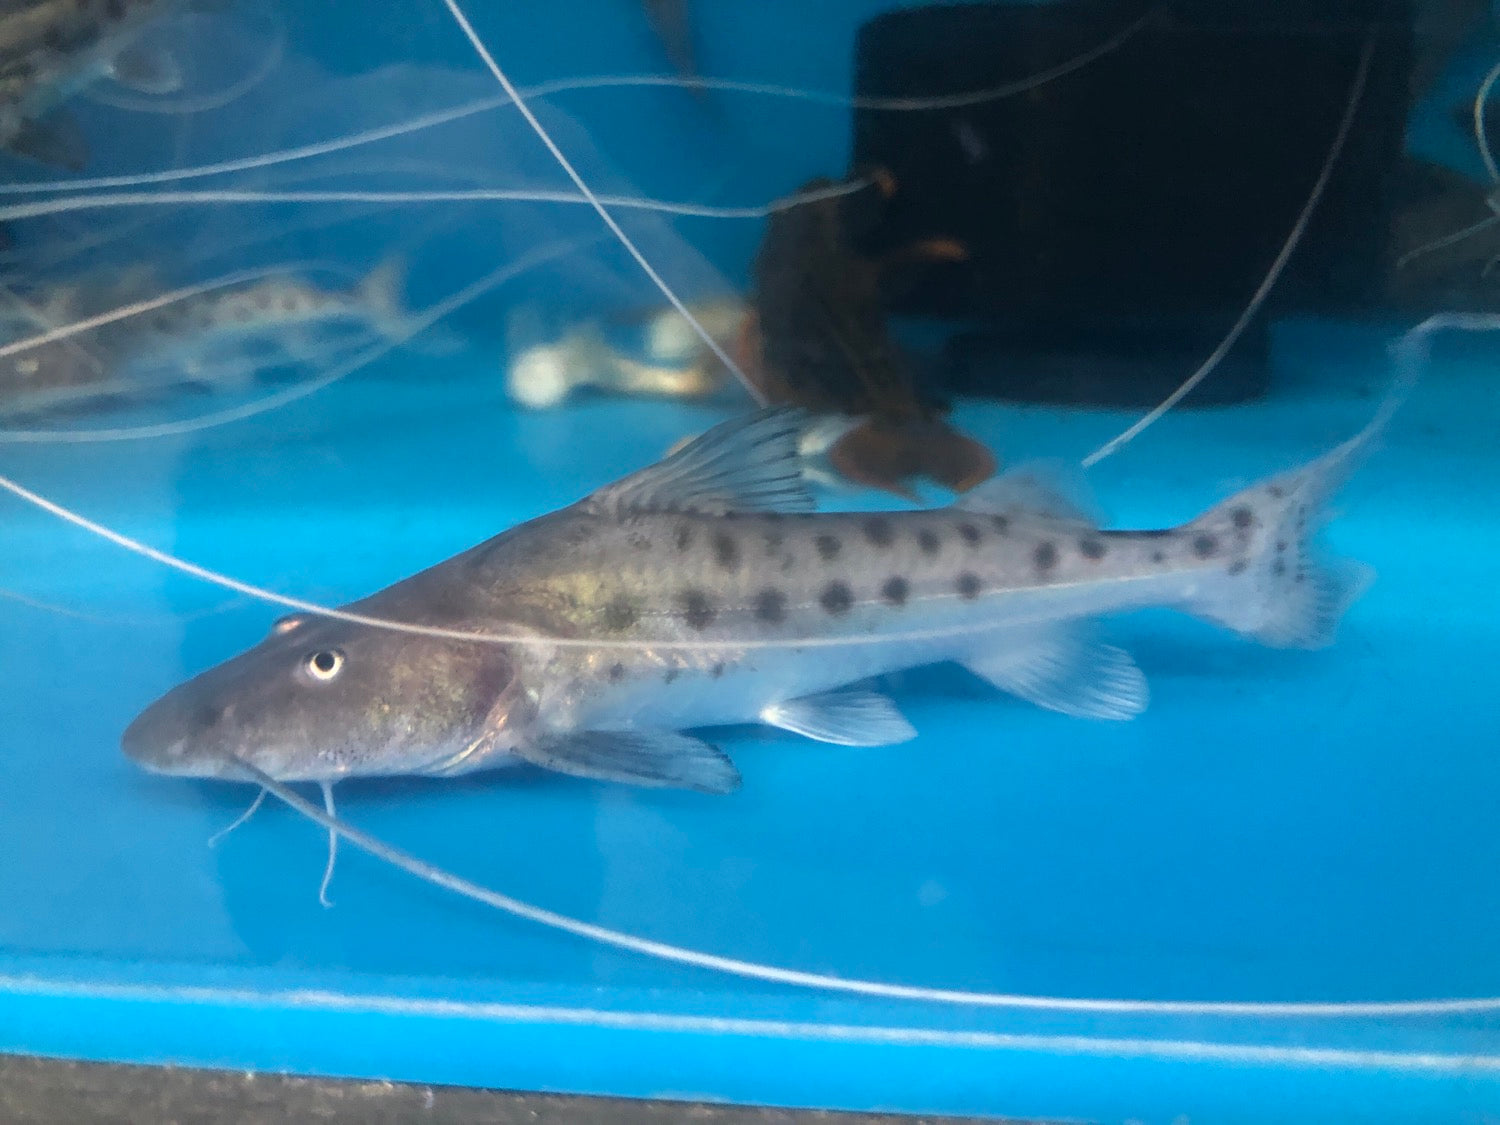 Capapretum Catfish (Brachyplatystoma capapretum)